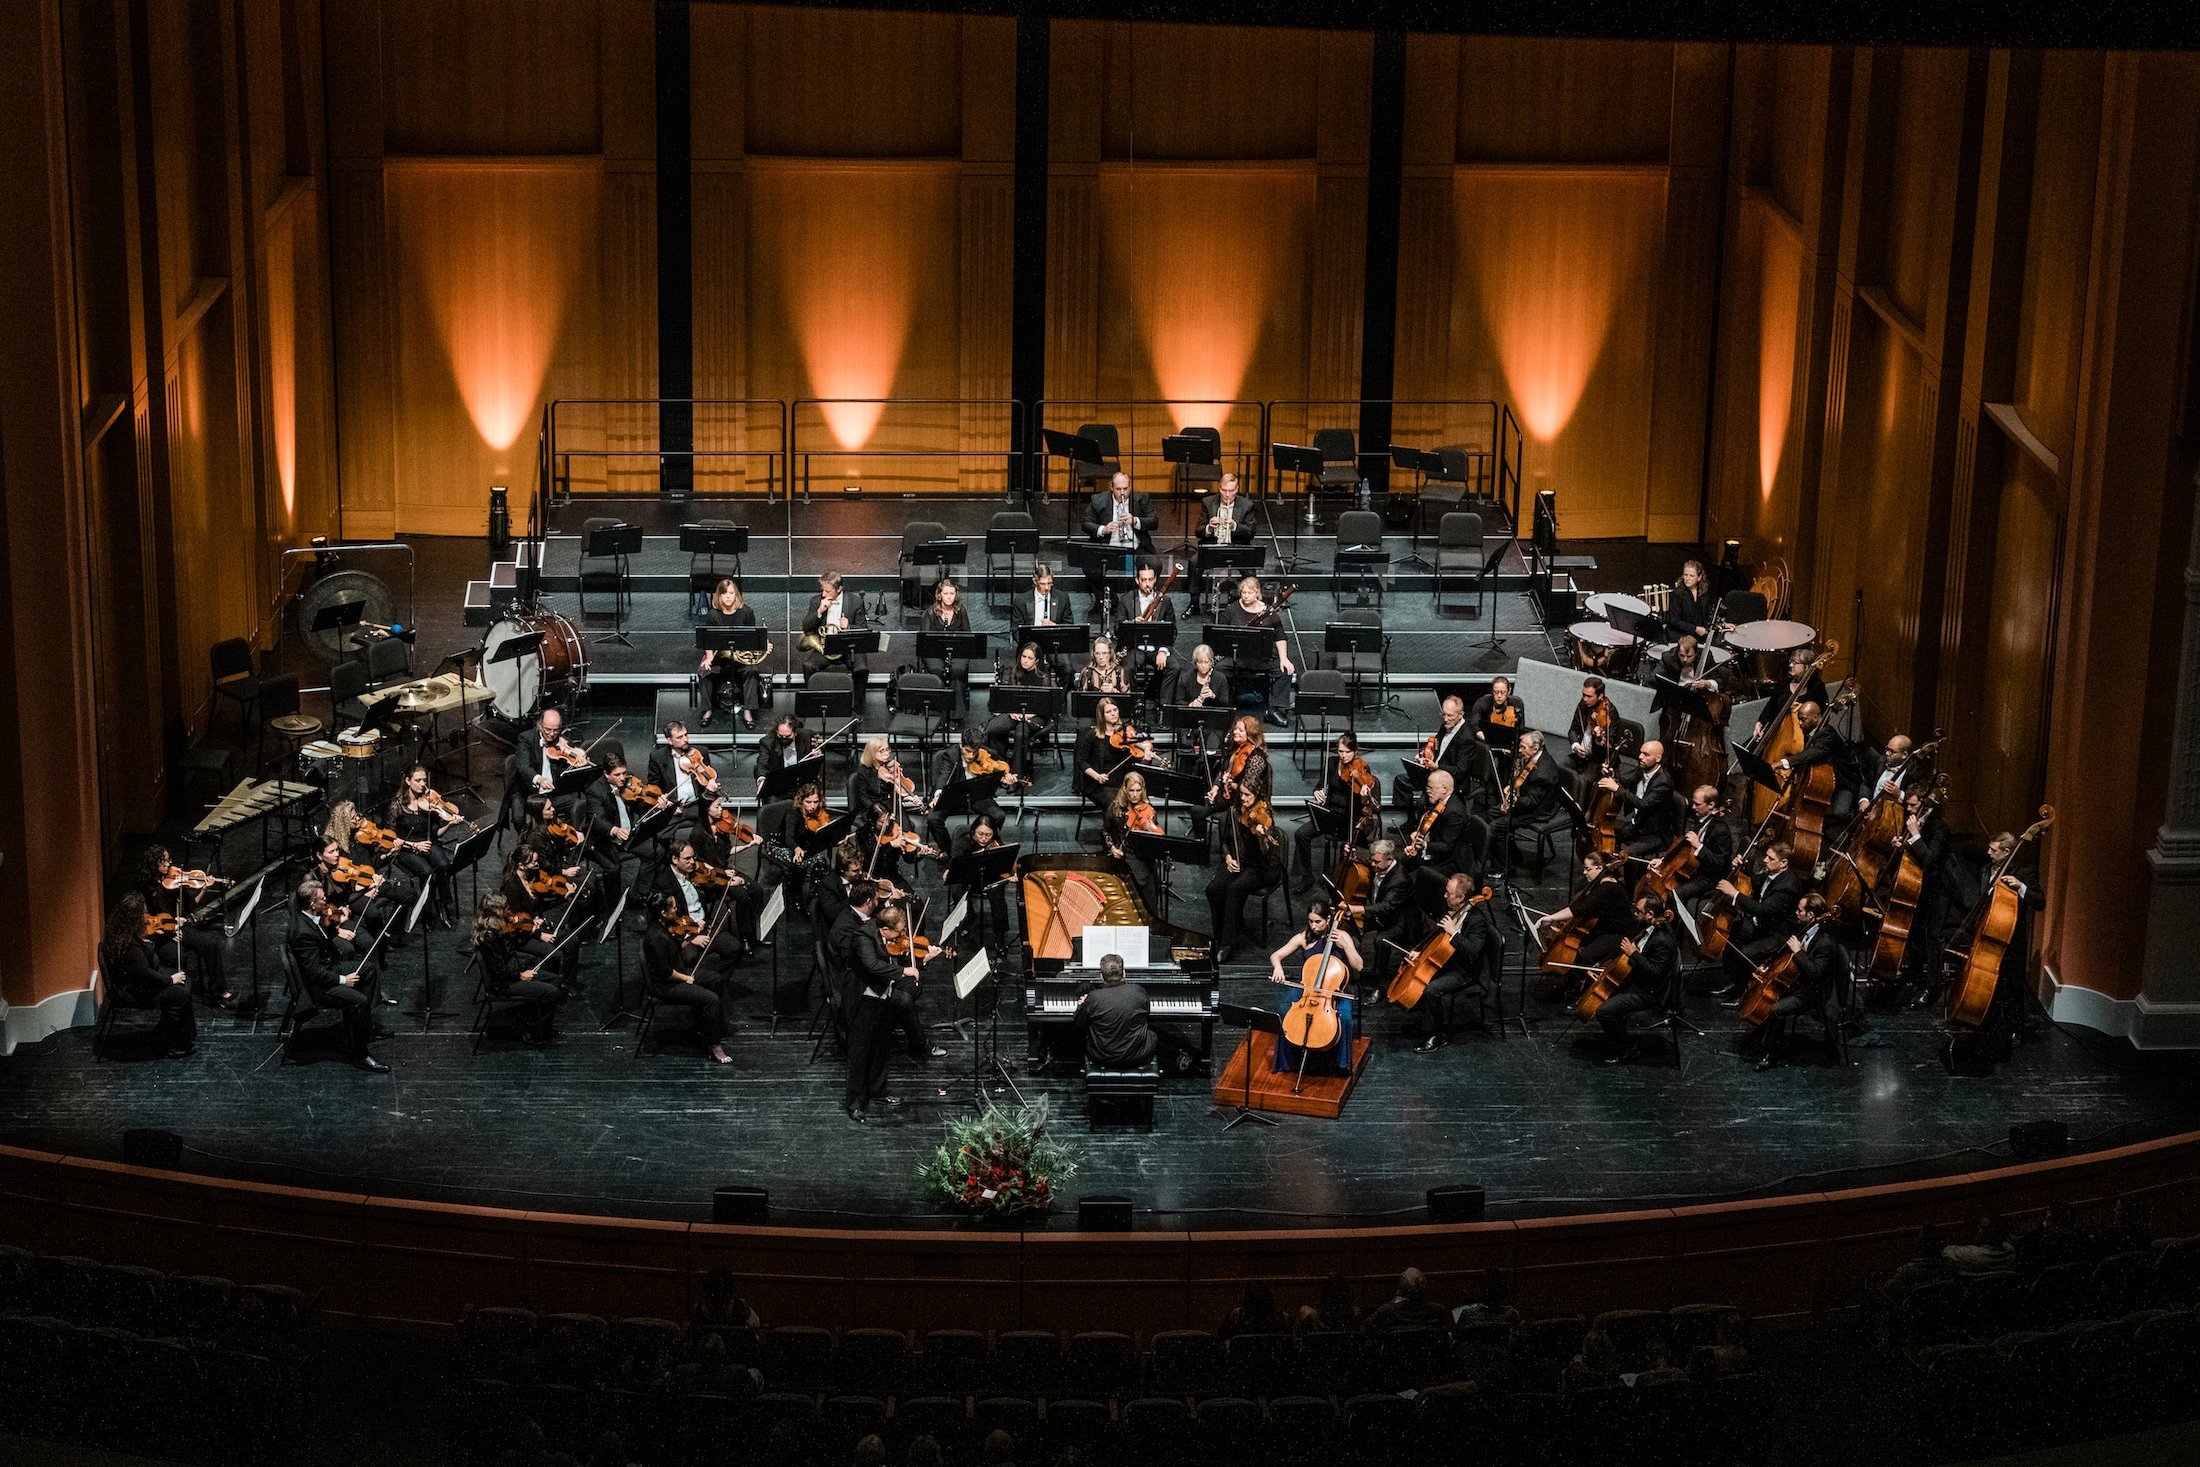 Charleston Symphony